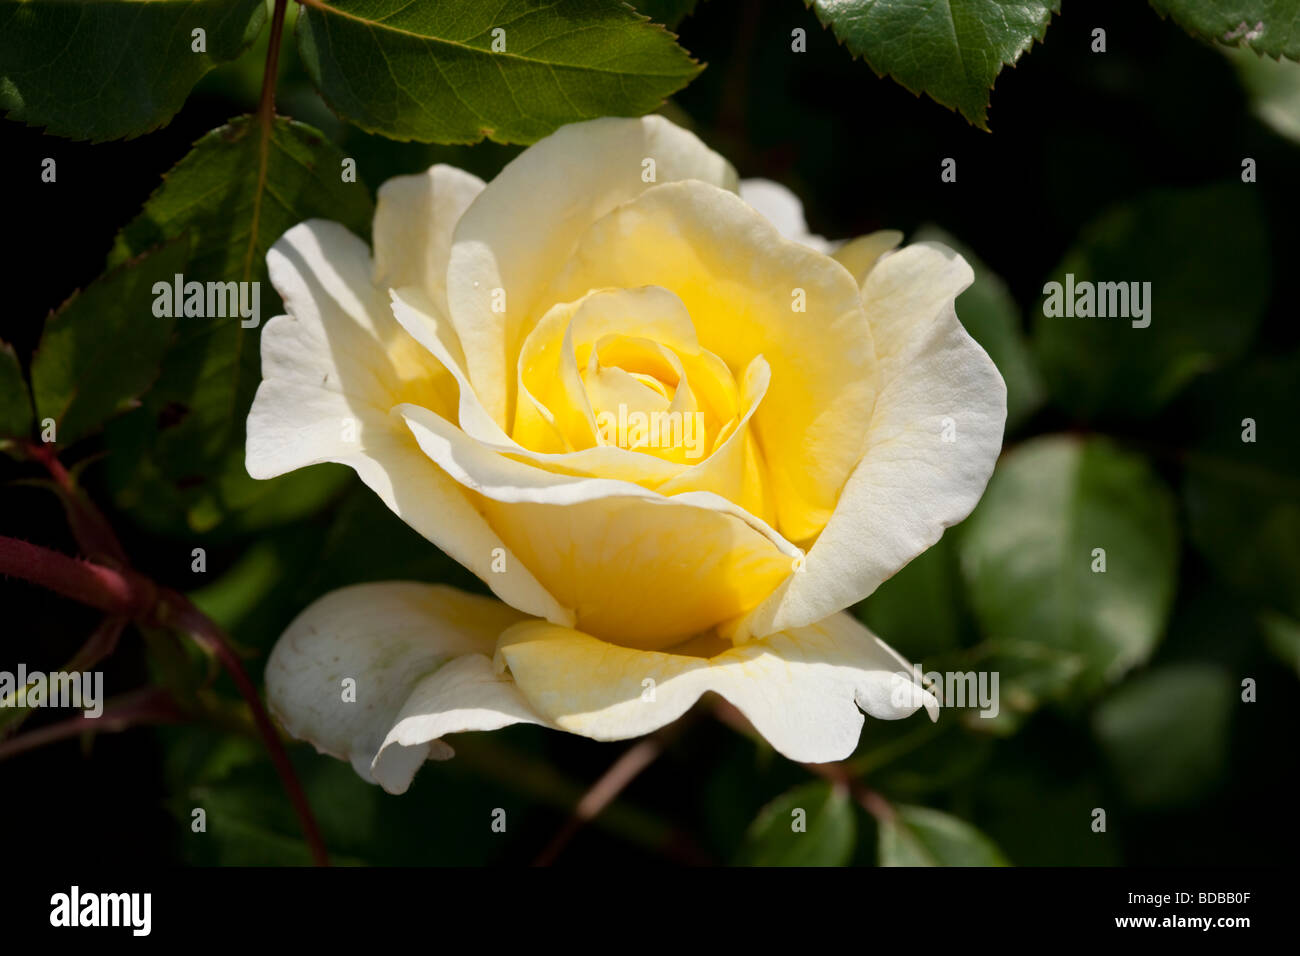 Castle rose stockholm floribunda hi-res stock photography and images - Alamy